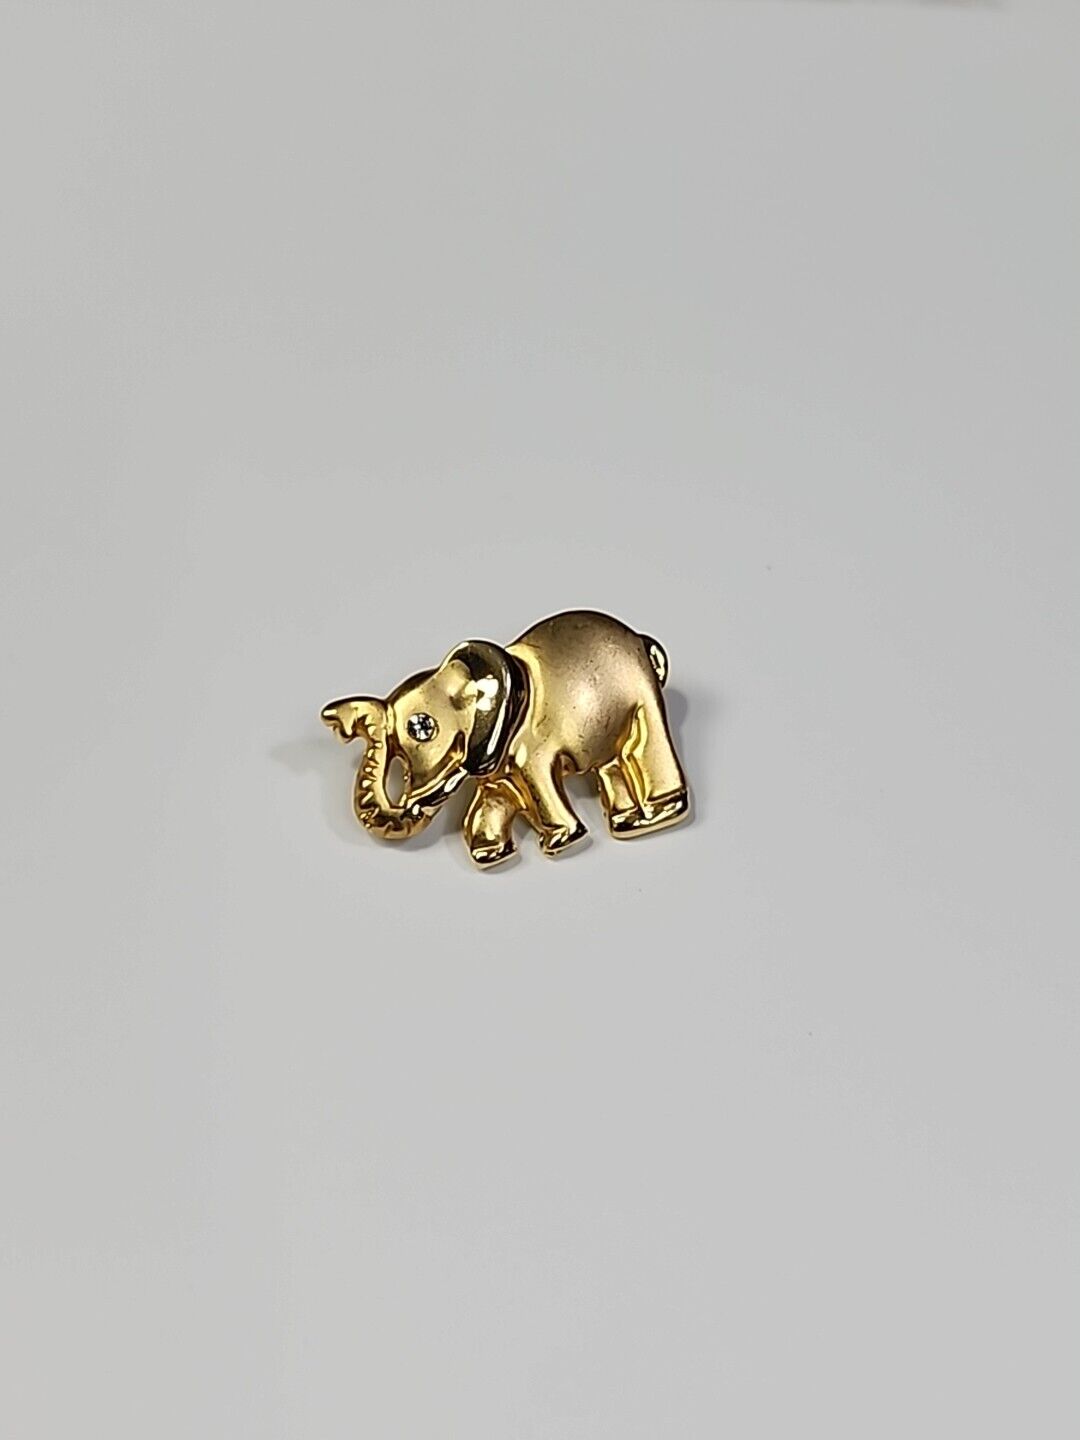 Elephant Lapel Pin Faux Jewel Eye Gold Color Metal Small Size 